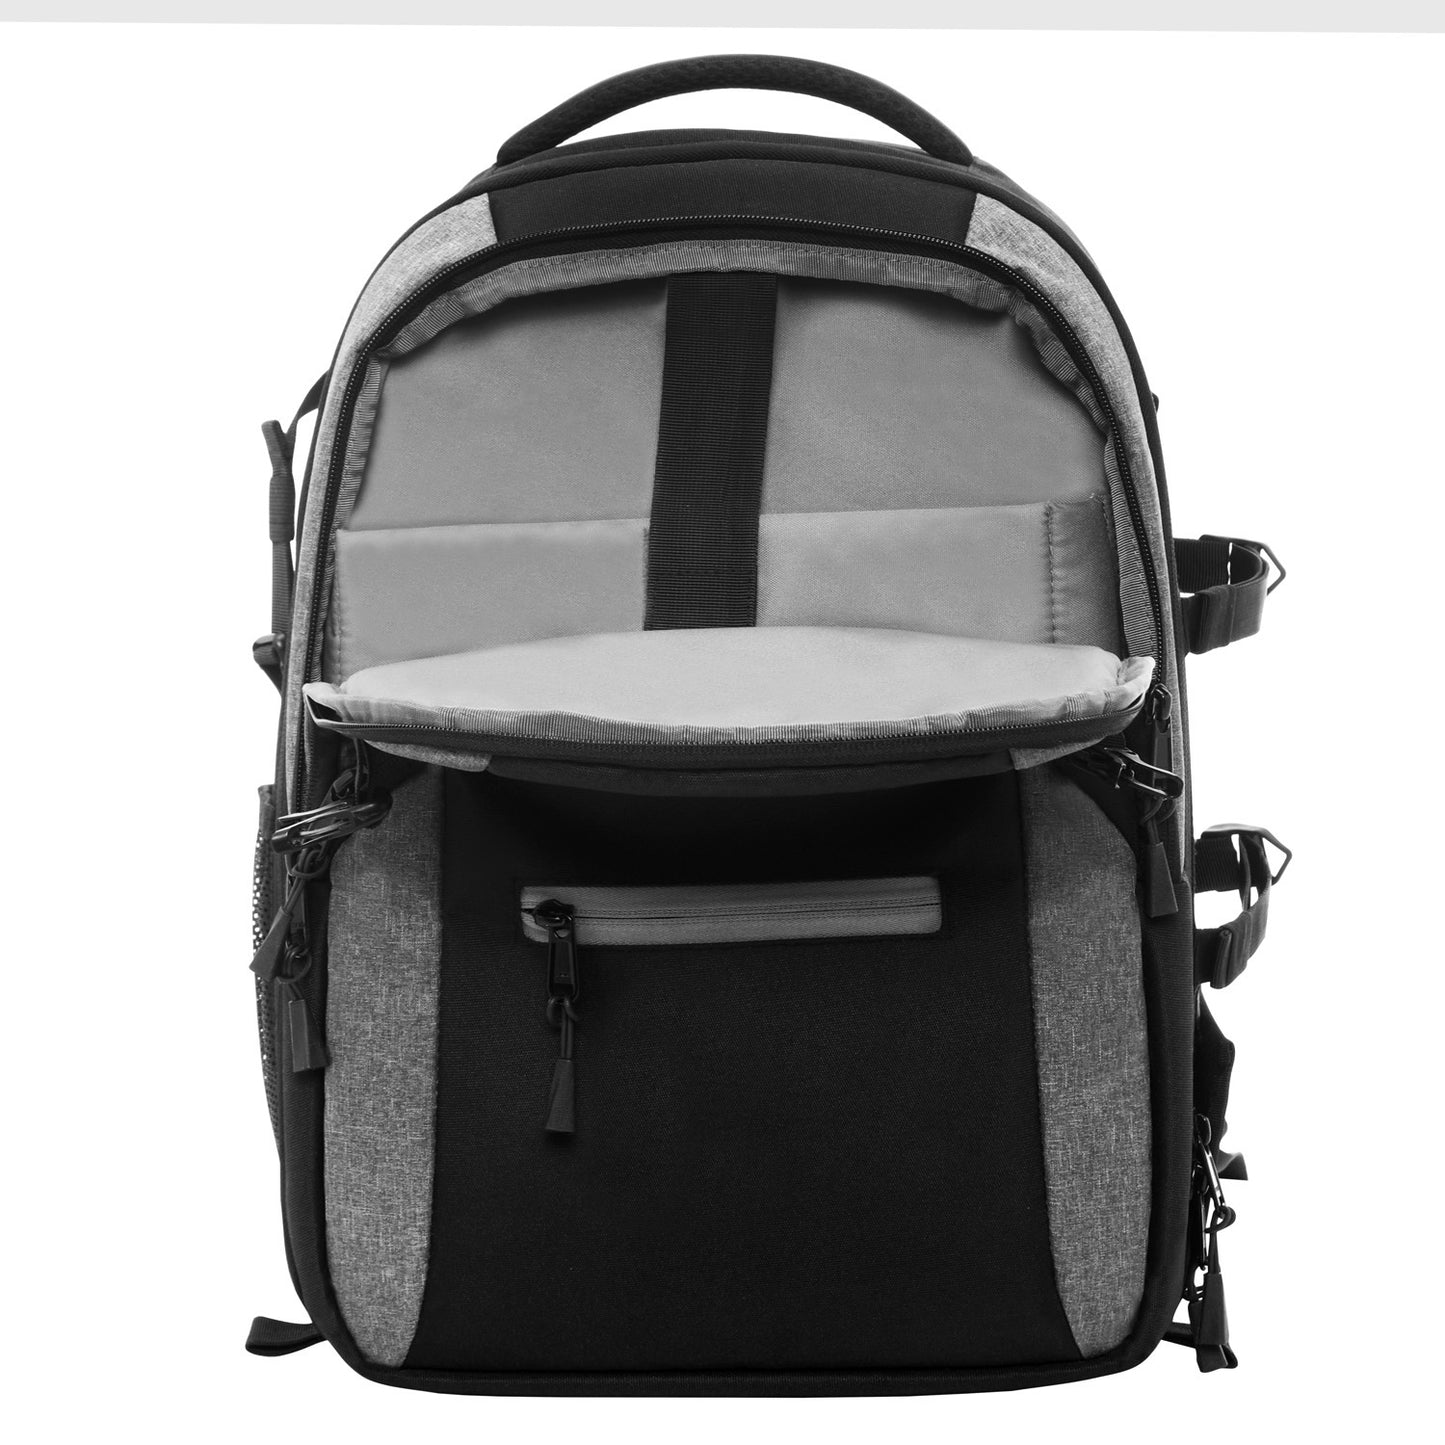 Kamron A91 Backpack Camera Bag